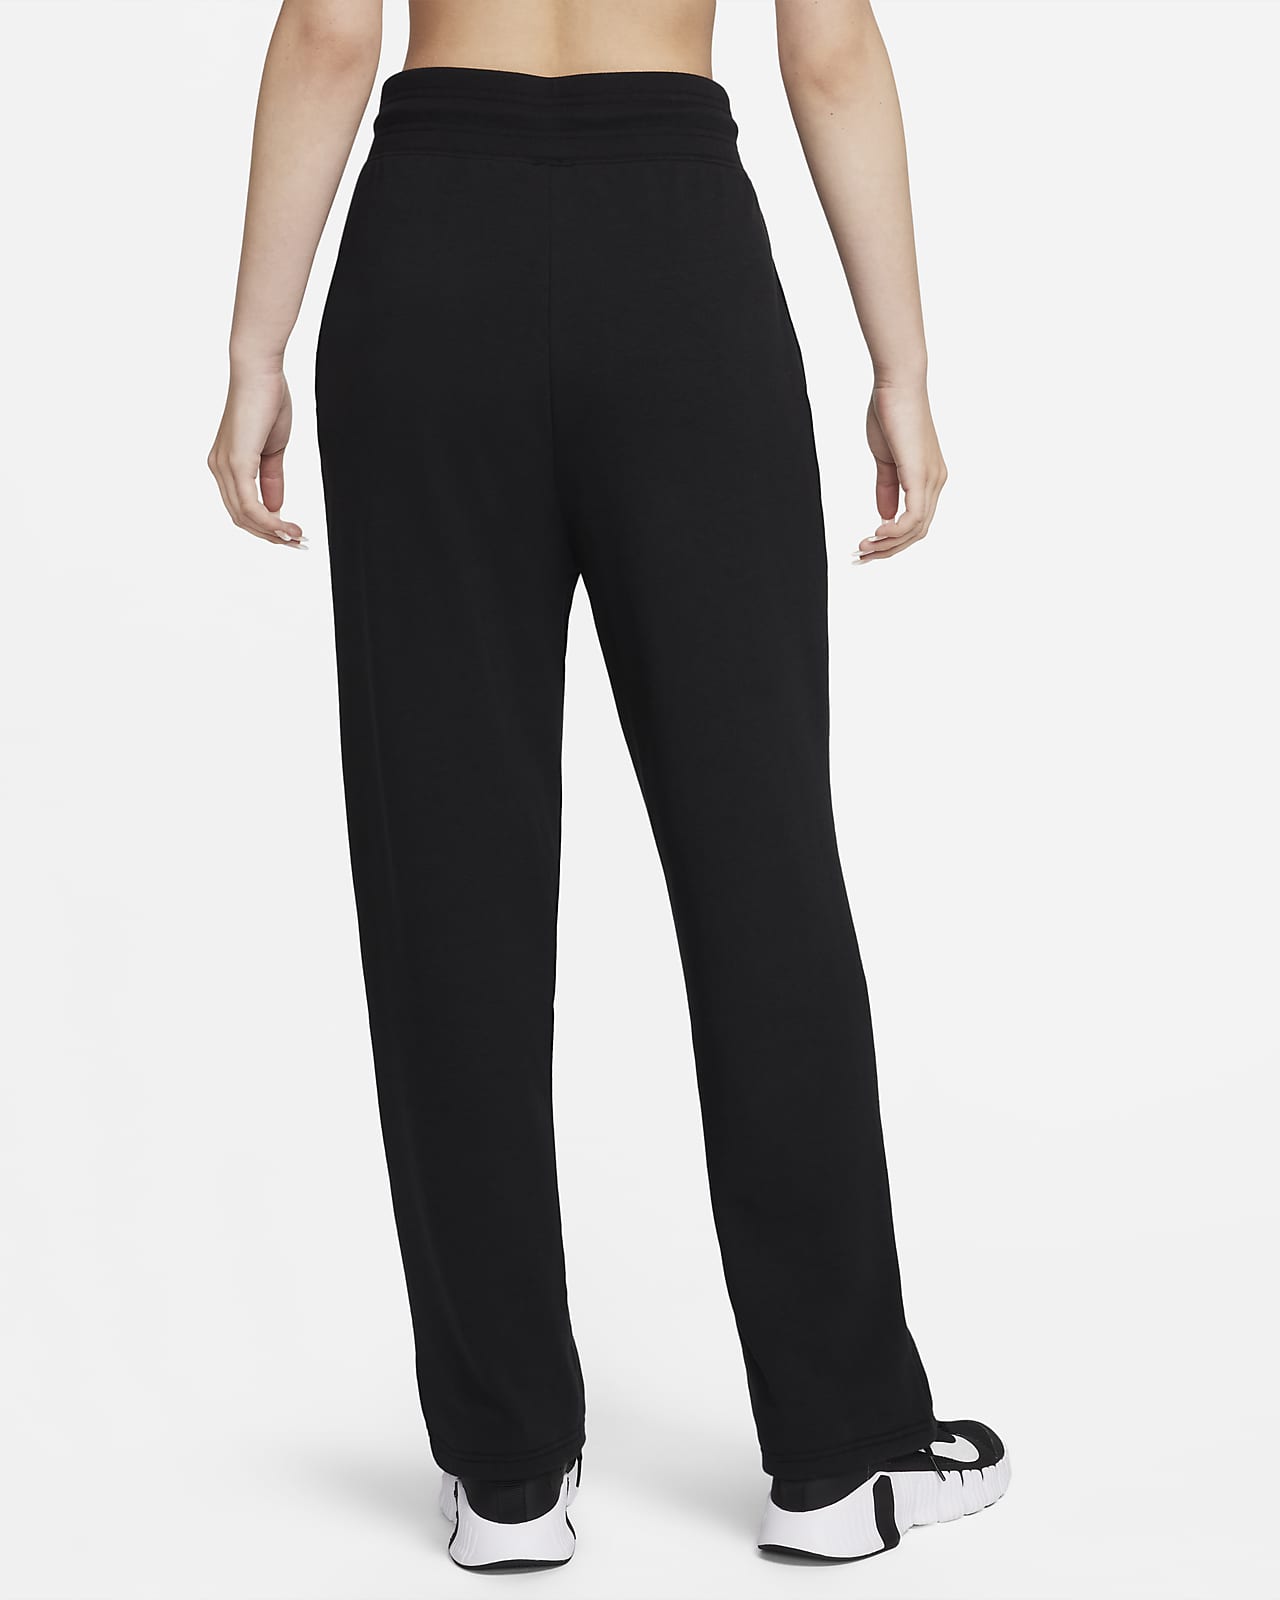 EX10SIVE Cotton Tracksuit Set For Women XL  Skinny Yoga Pants  Tshirt  Set  Amazonin Clothing  Accessories